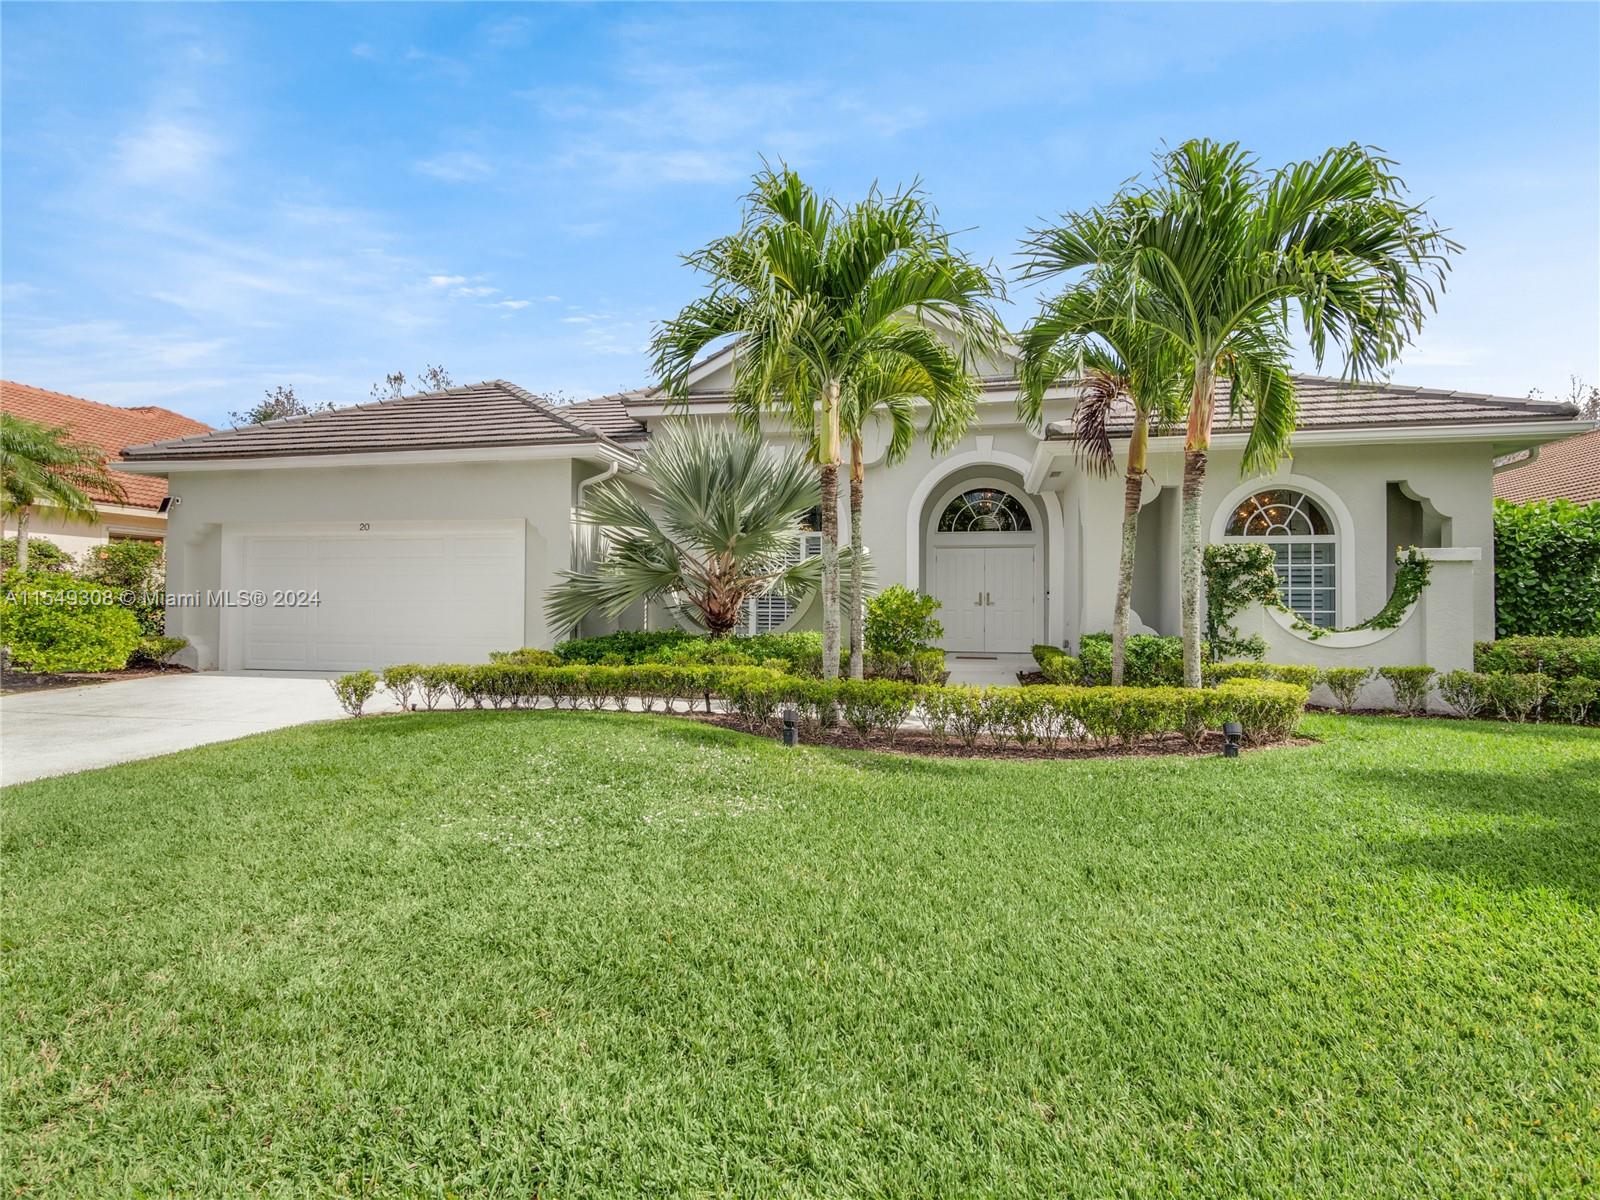 Rental Property at 20 Windward Isle Isle, Palm Beach Gardens, Palm Beach County, Florida - Bedrooms: 4 
Bathrooms: 4  - $12,000 MO.